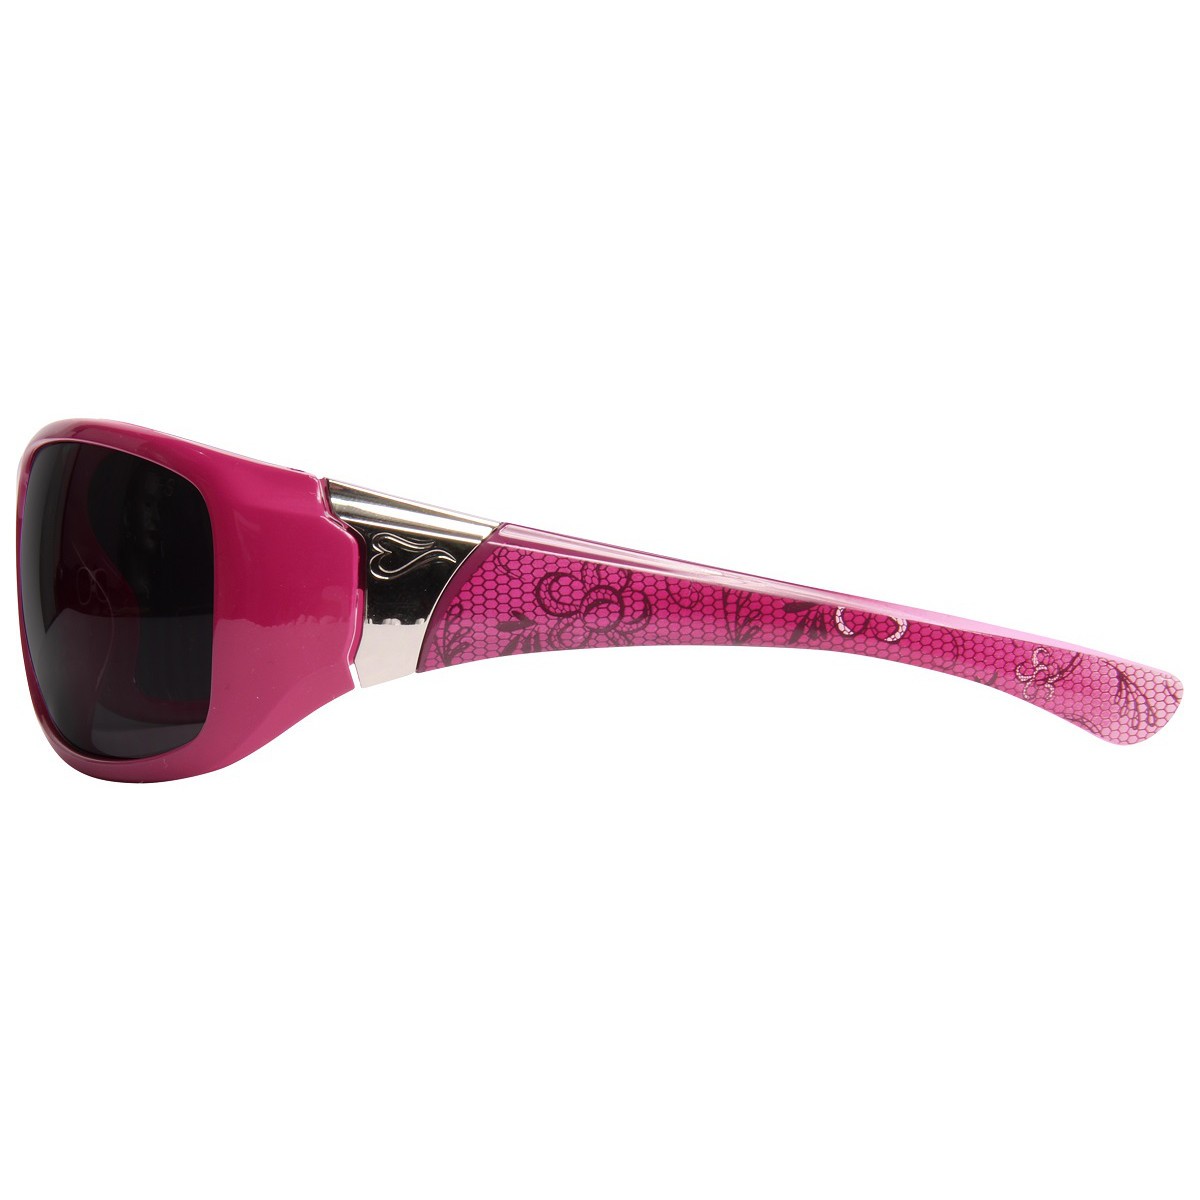 Womens Pink Camo Safety Sun Glasses Gray Lens w/ Strap ERB 15342 NEW ANSI Z87.1 